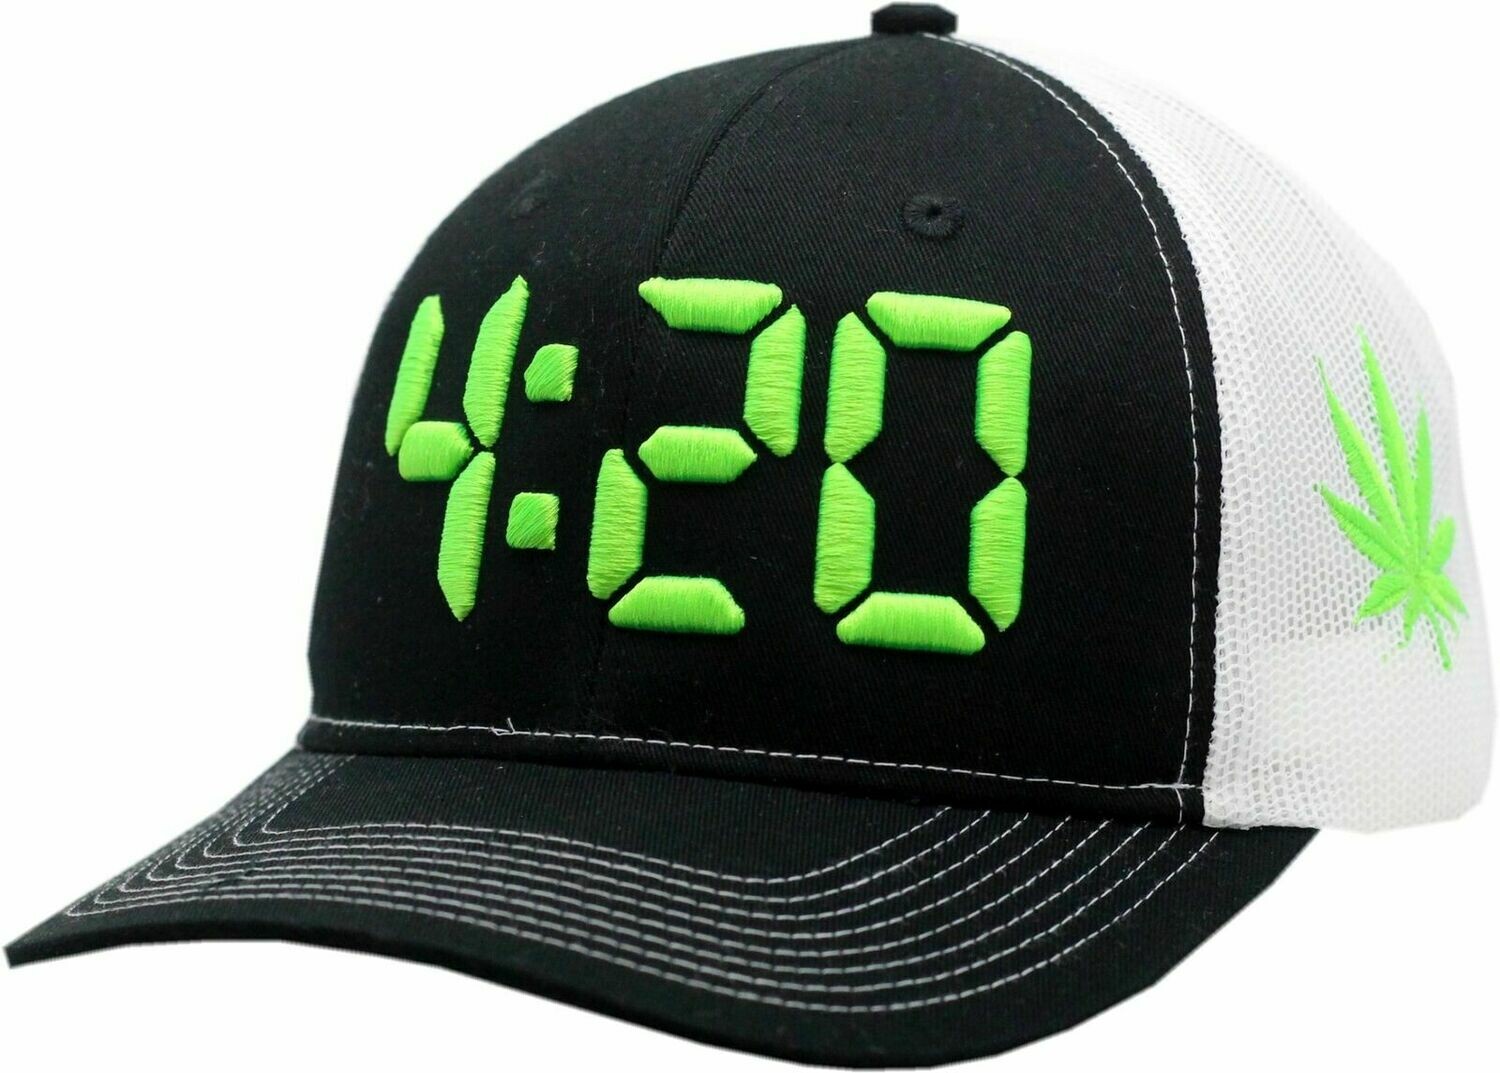 4:20 Marijuana Leaf Trucker Mesh Snapback Hat